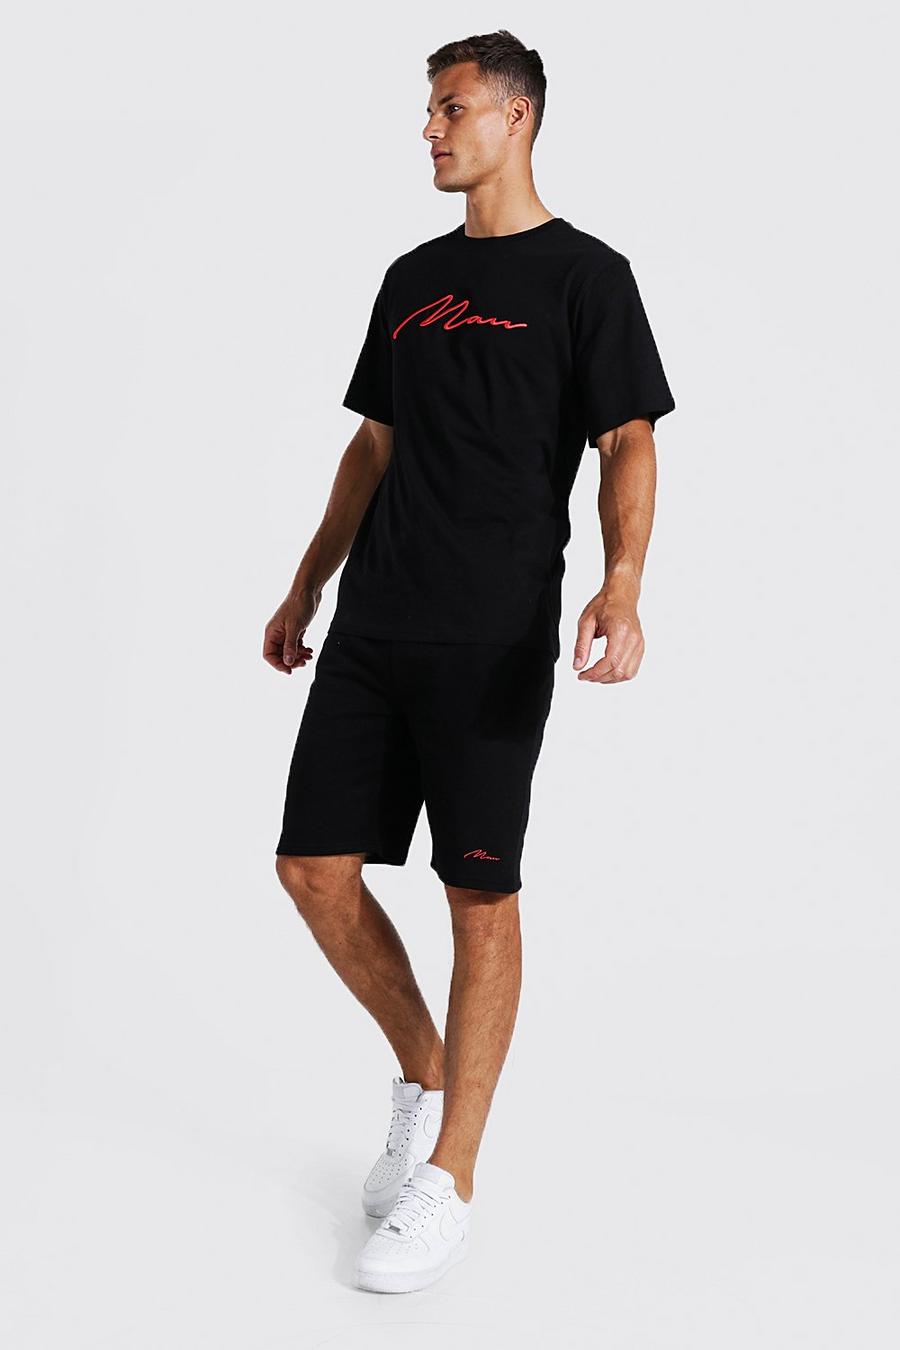 Set Tall T-shirt & pantaloncini con logo Man ricamato in rilievo, Black nero image number 1